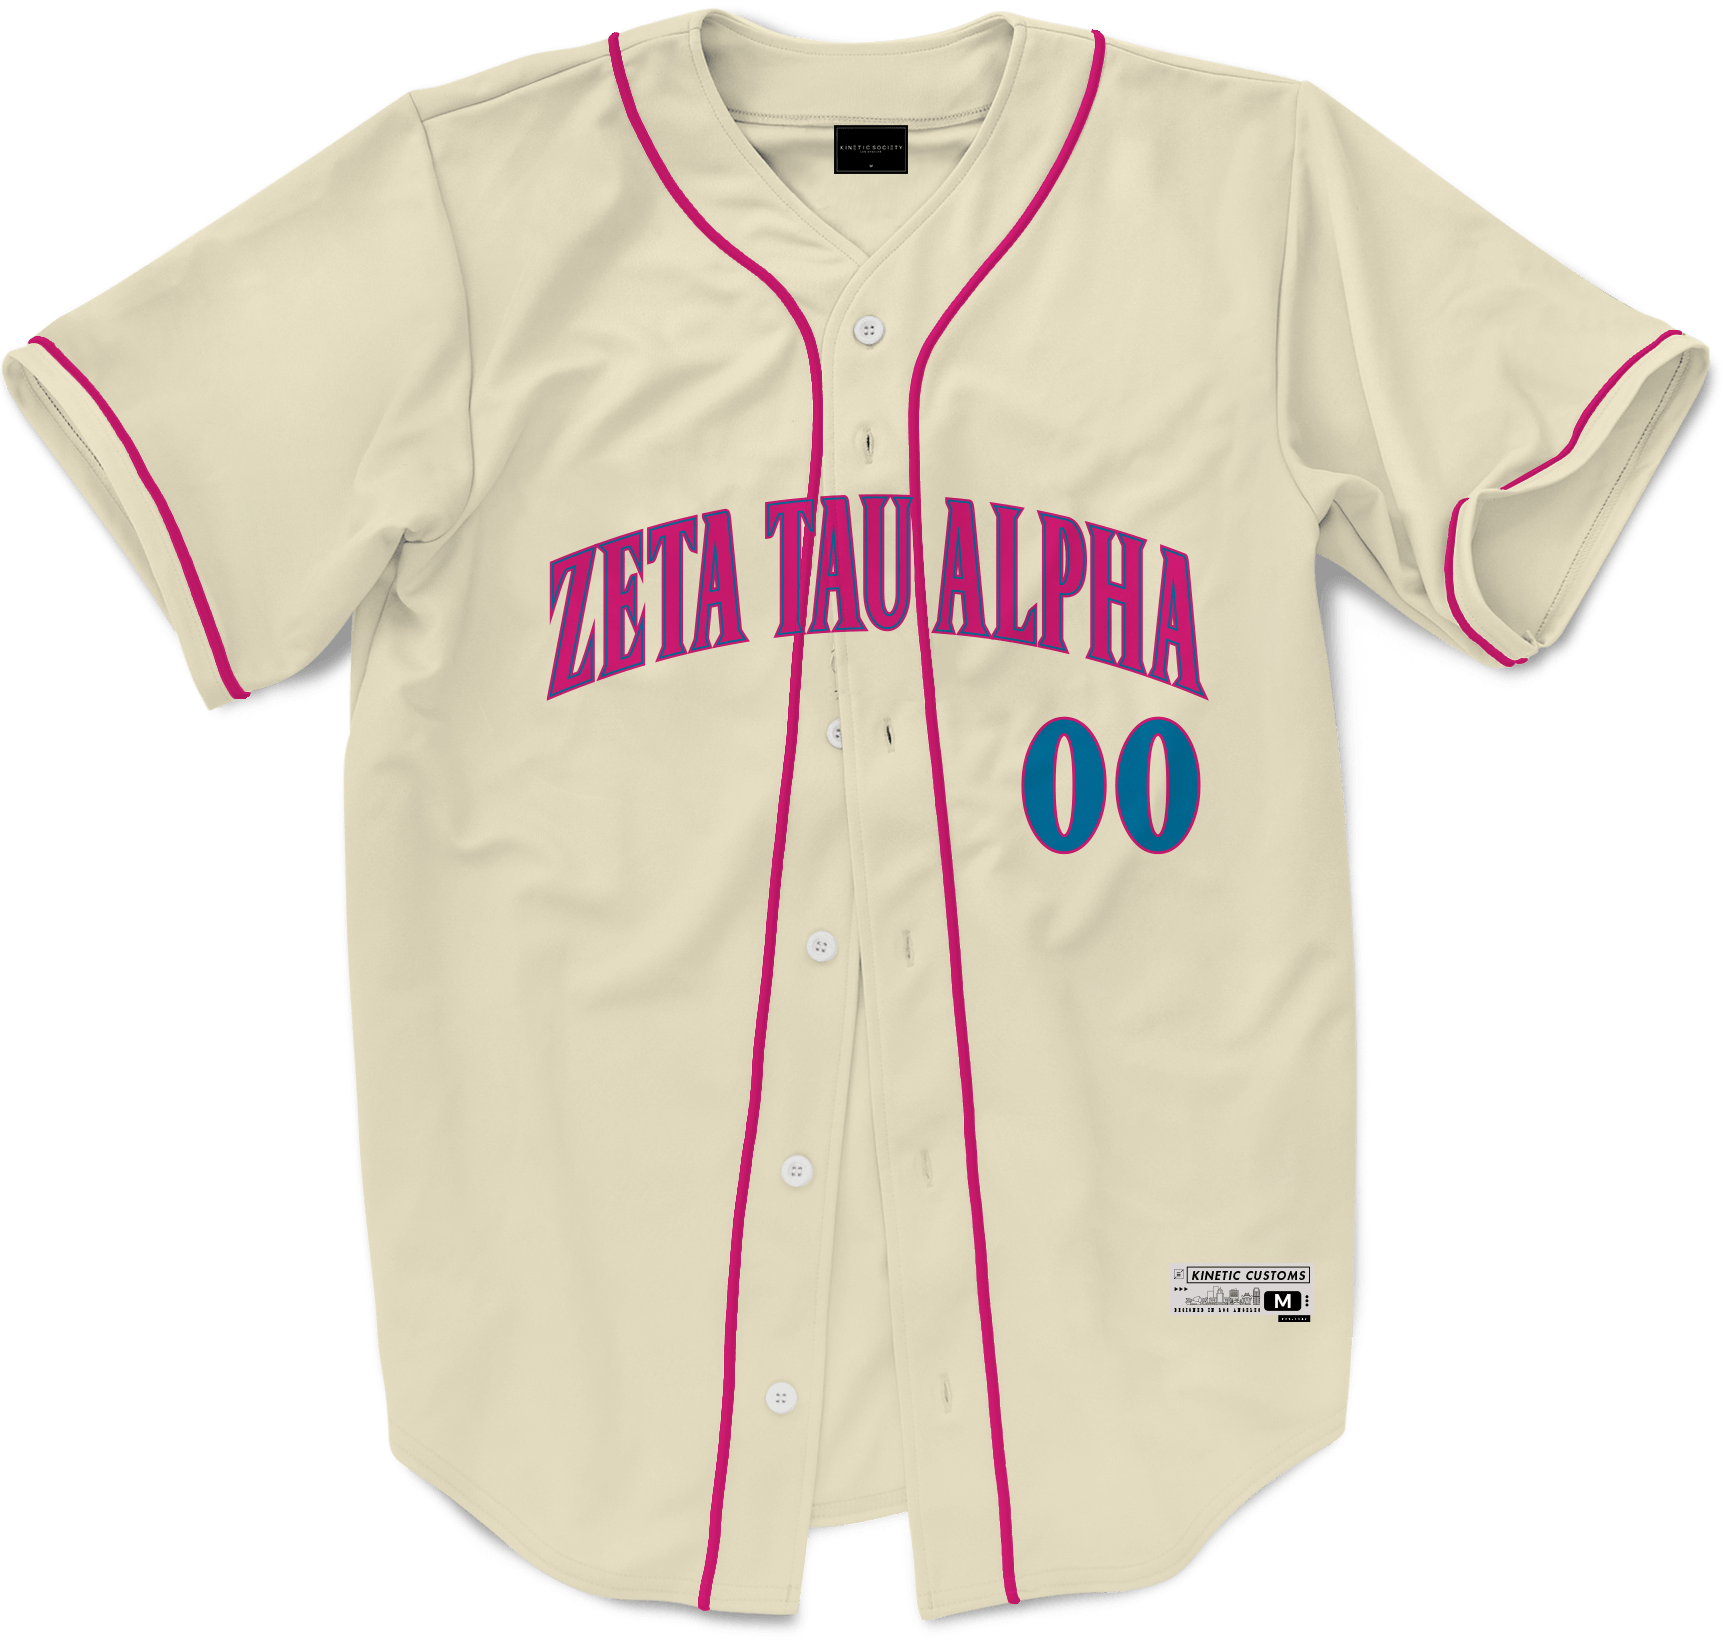 Zeta Tau Alpha - Cream Baseball Jersey Premium Baseball Kinetic Society LLC 